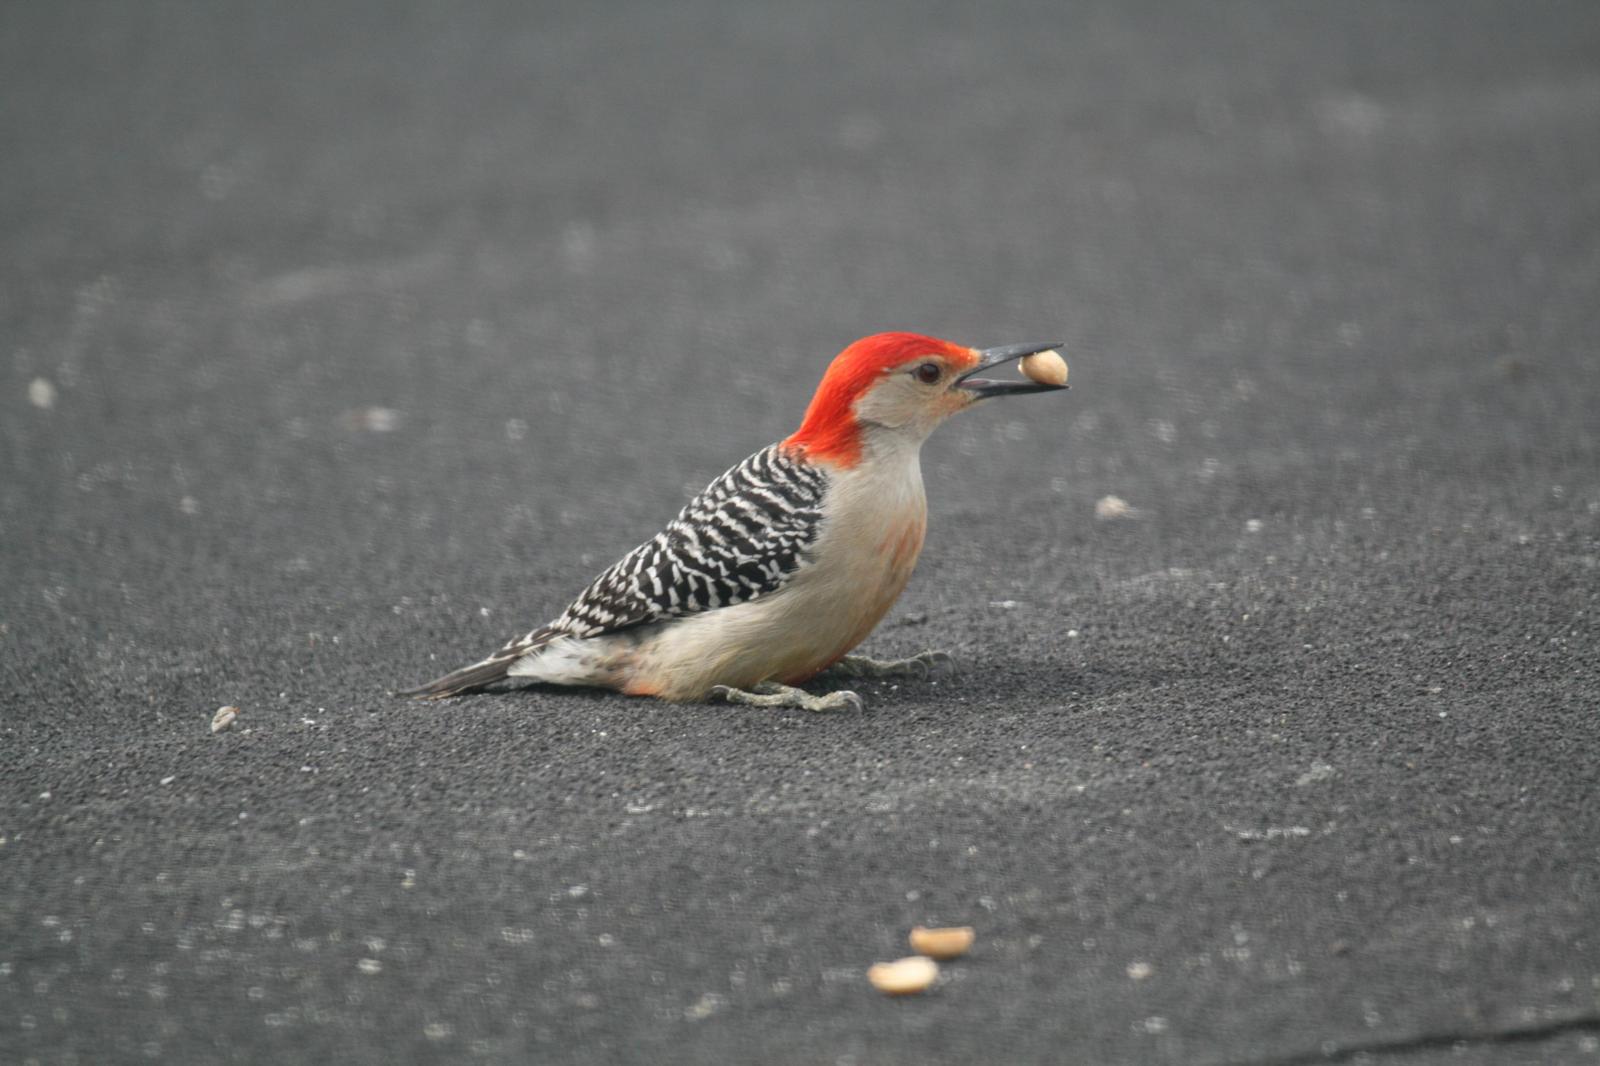 Red-bellied Woodpecker Photo by Roseanne CALECA